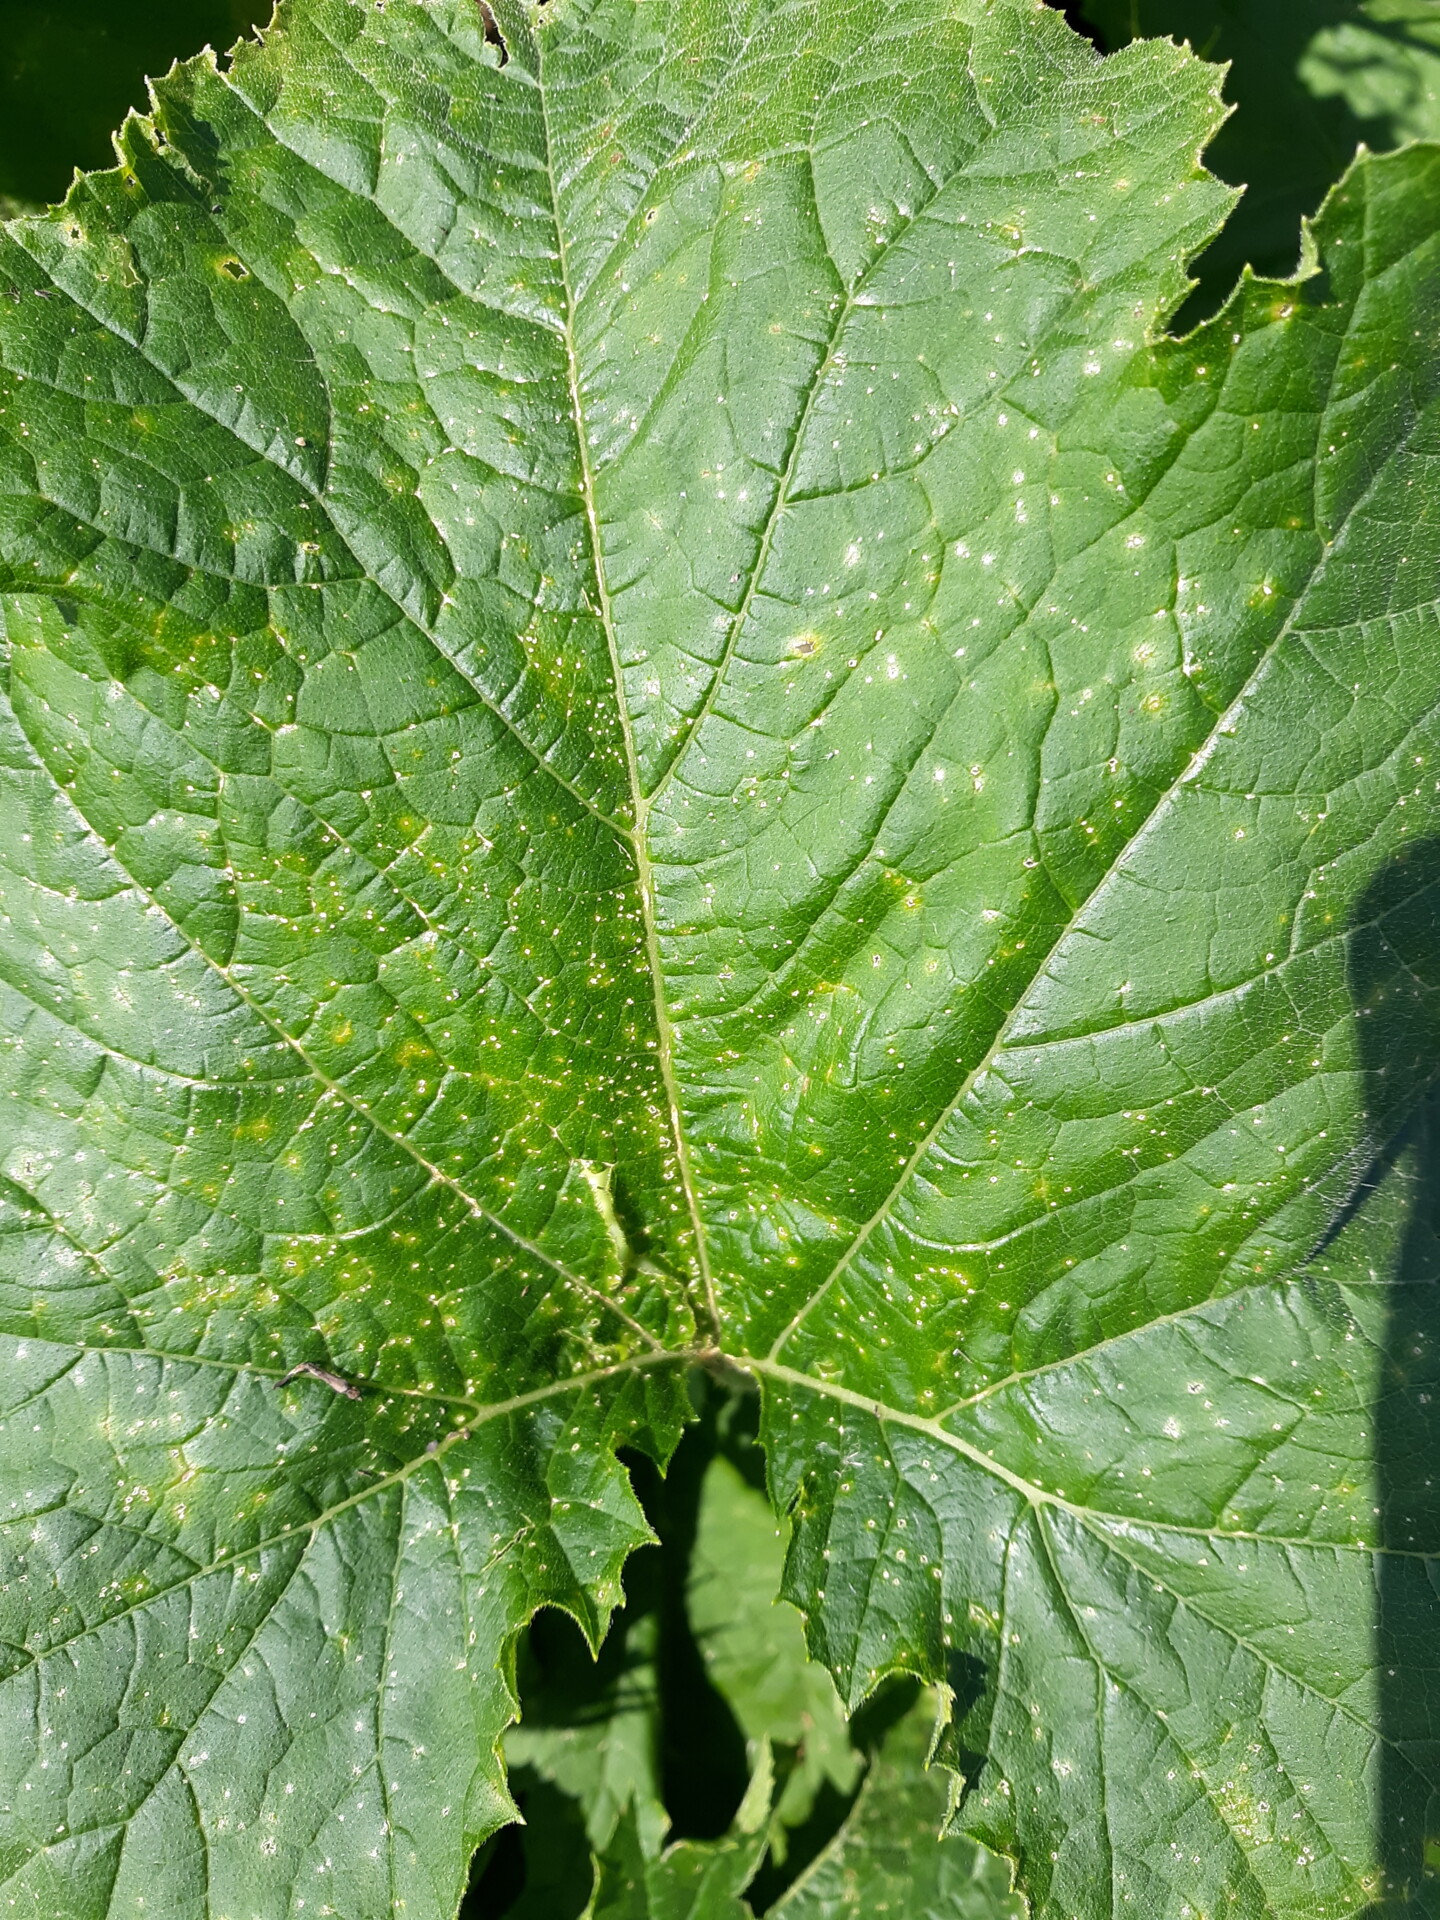 Figure 5. Plectosporium blight of pumpkin on leaf.